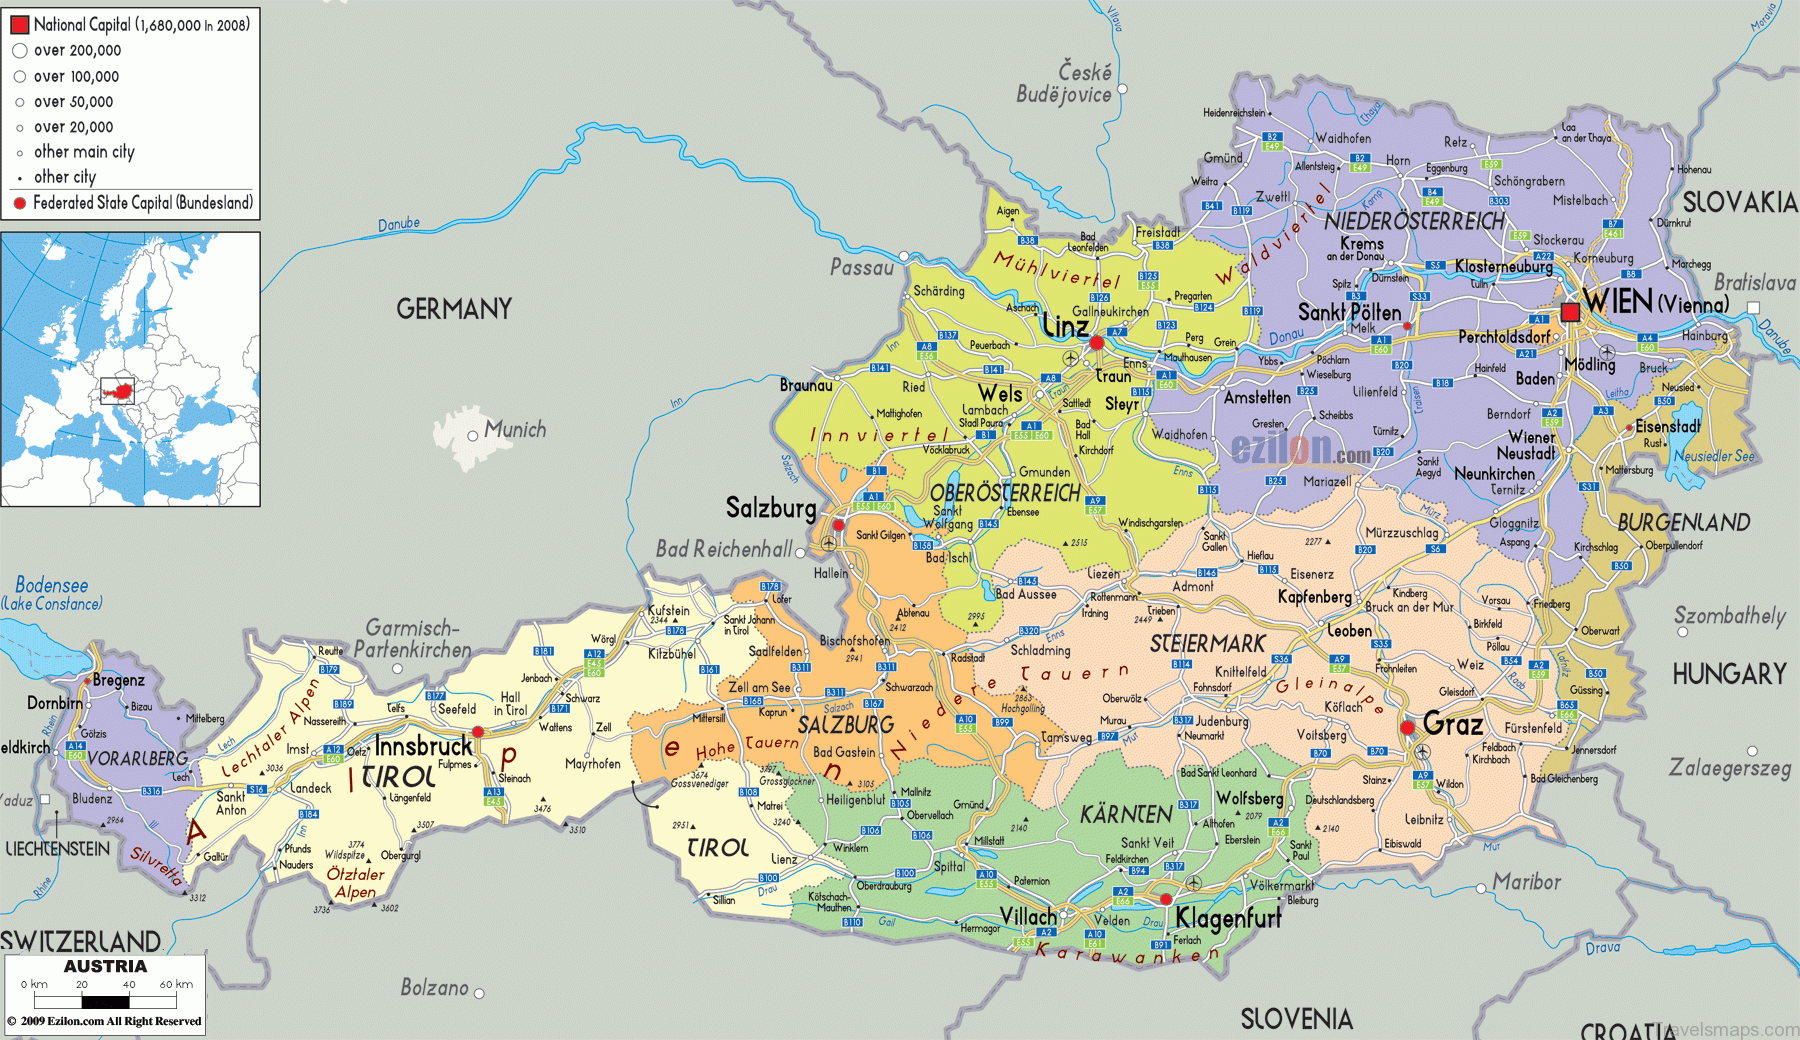 https://www.ezilon.com/maps/images/europe/Austrian-political-map.gif